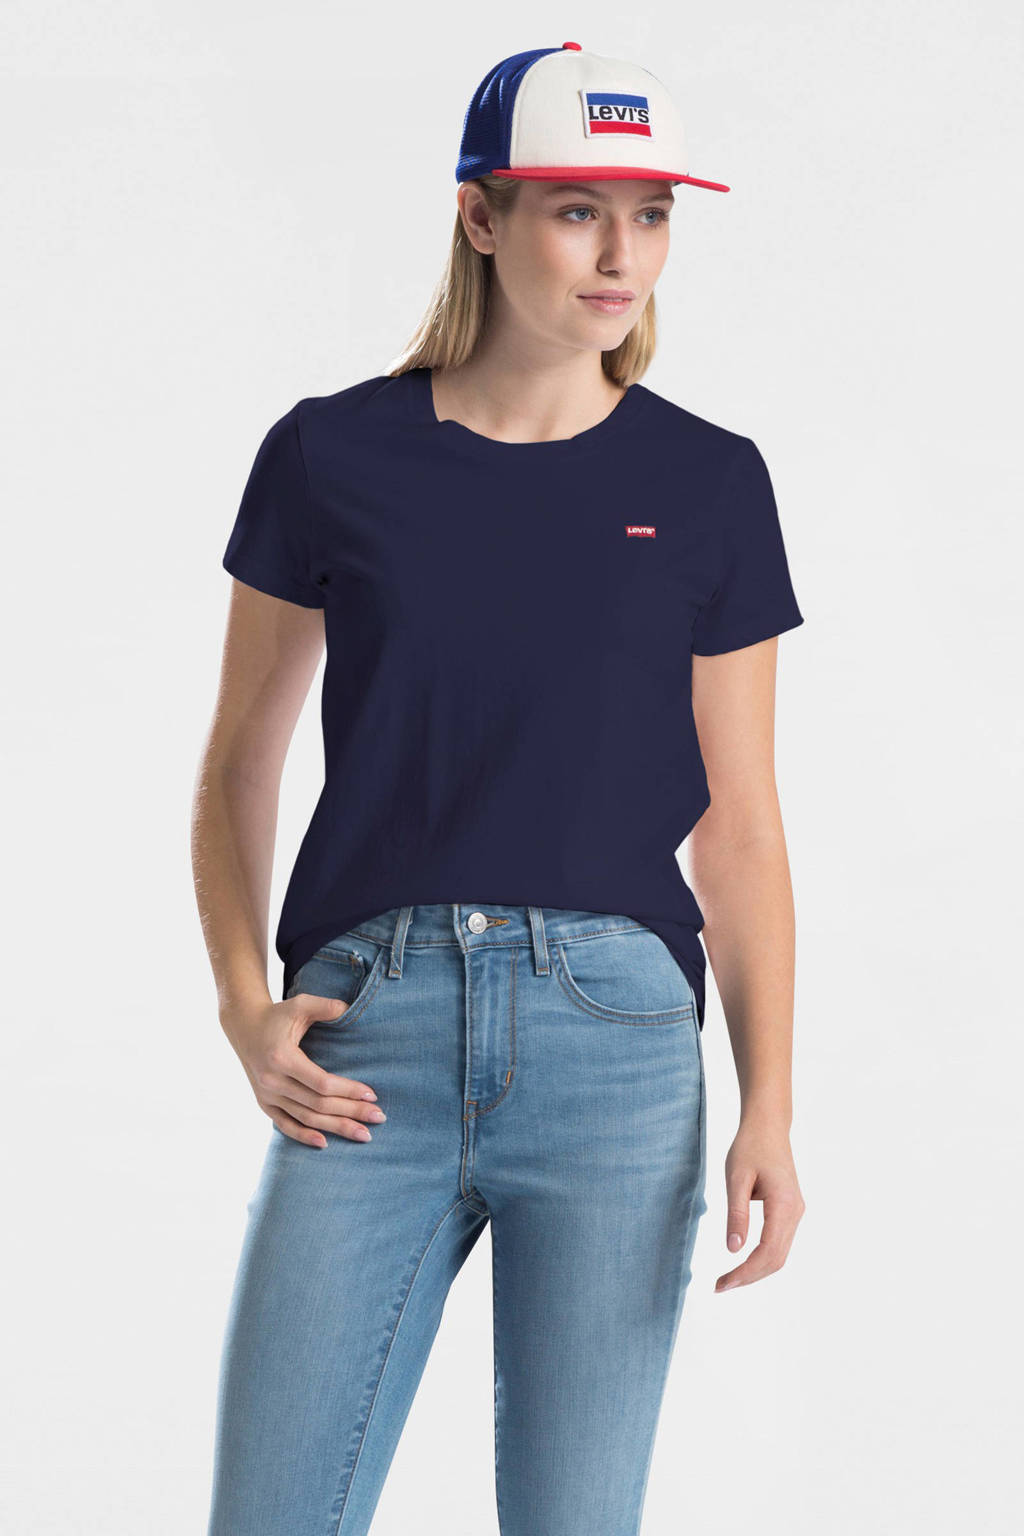 hoofdonderwijzer fout kamp Levi's T-shirt met logo donkerblauw | wehkamp